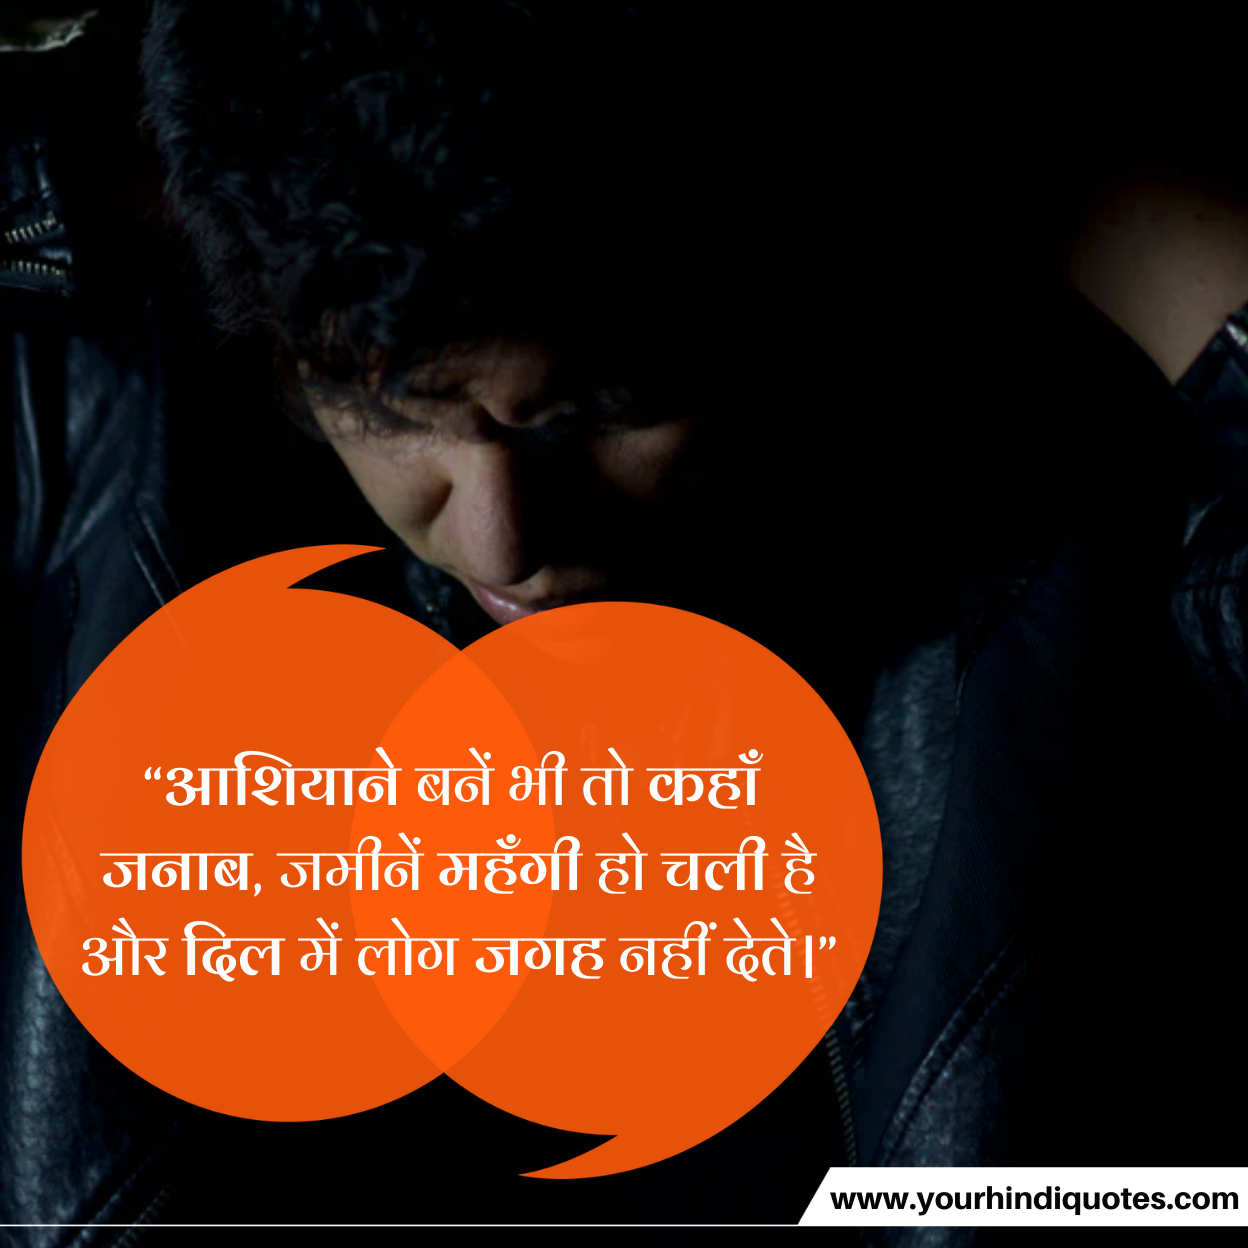 Hindi emotional quote photo